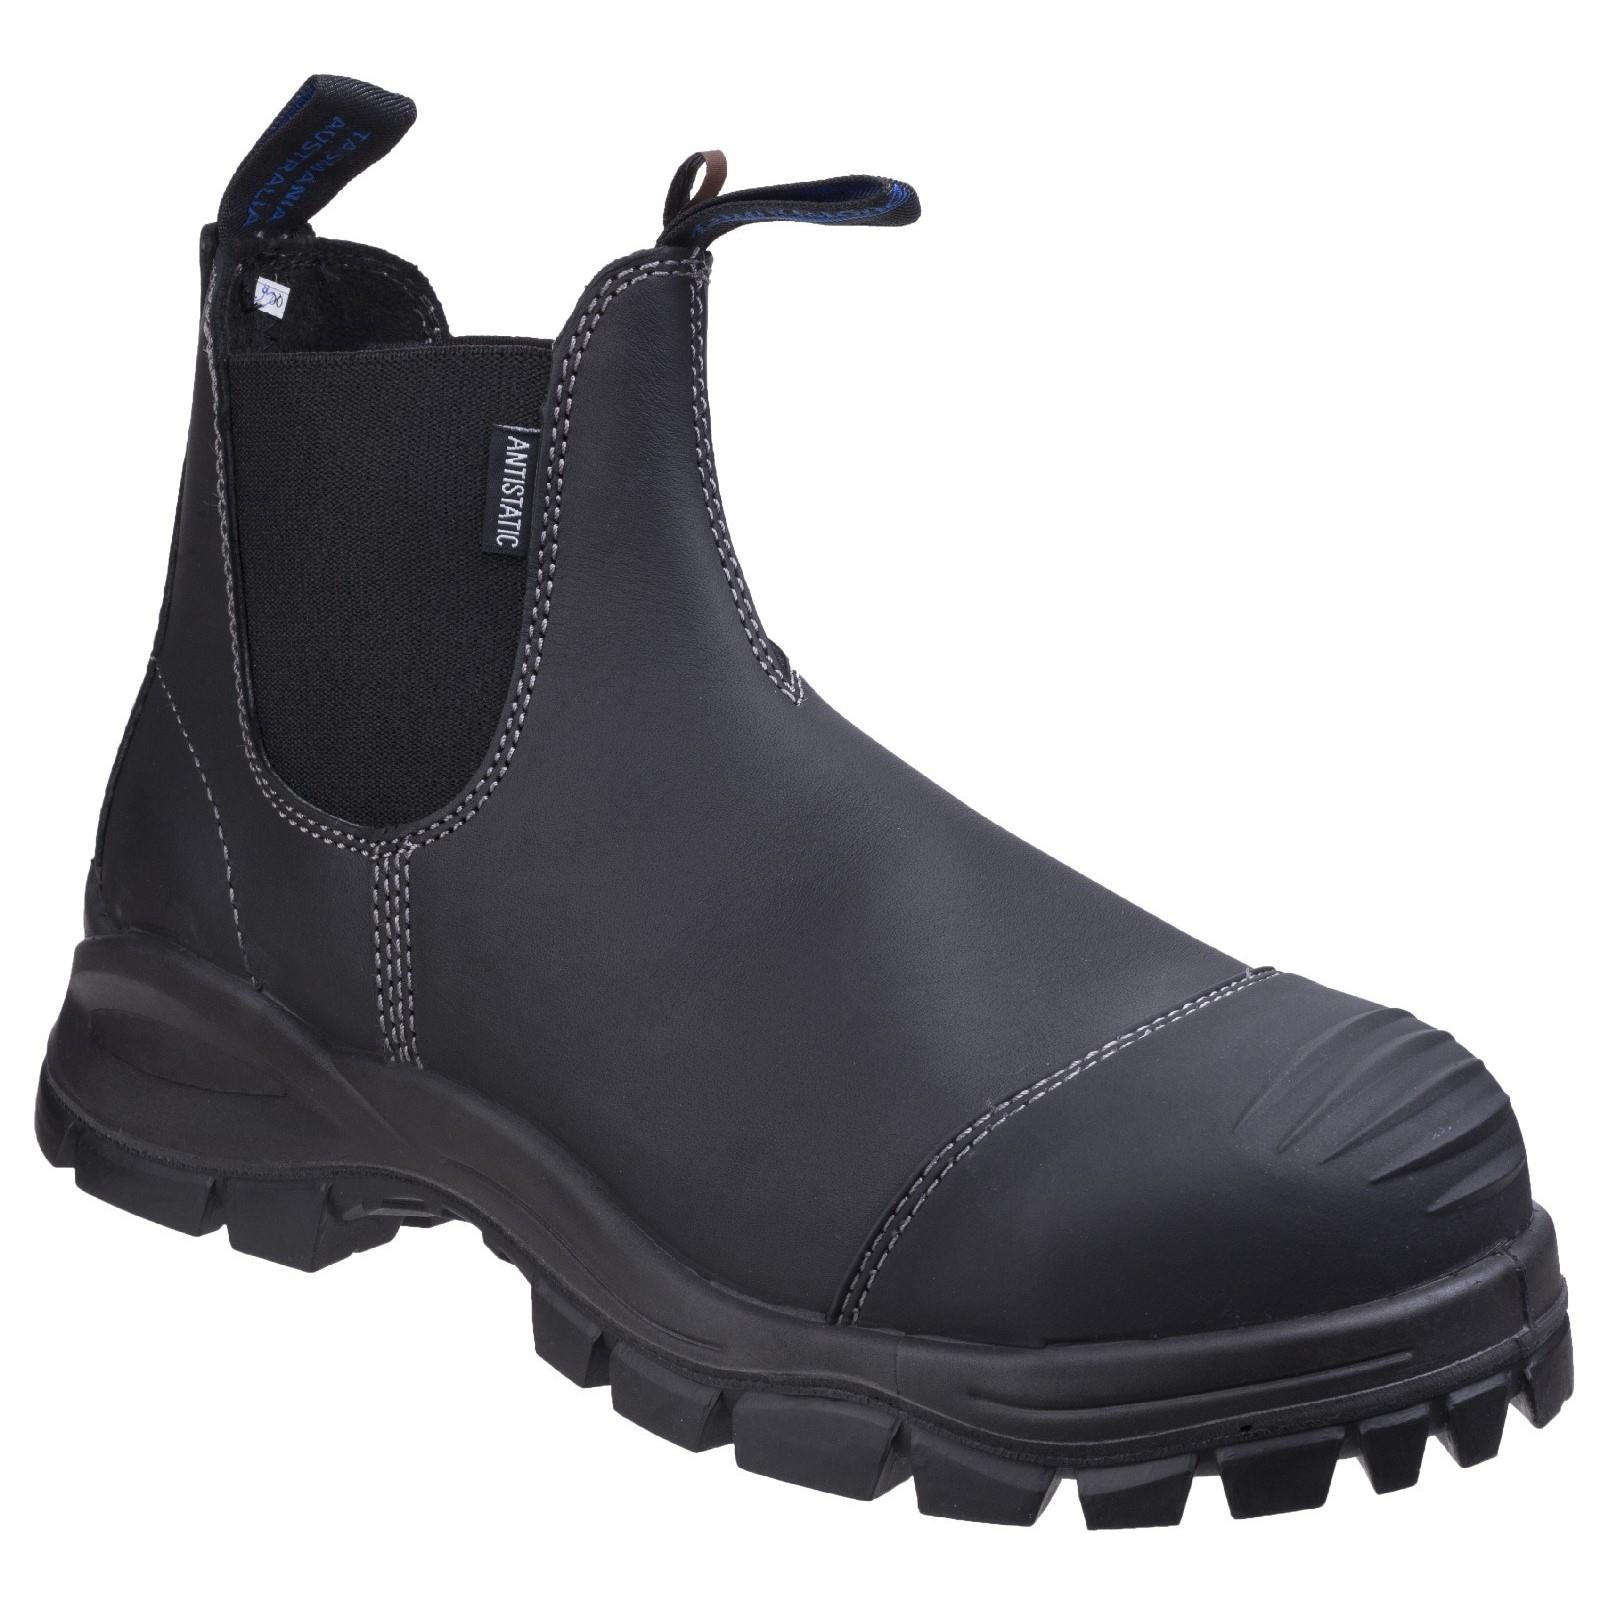 Blundstone 910 S3 black steel toe-cap/midsole safety dealer work boot